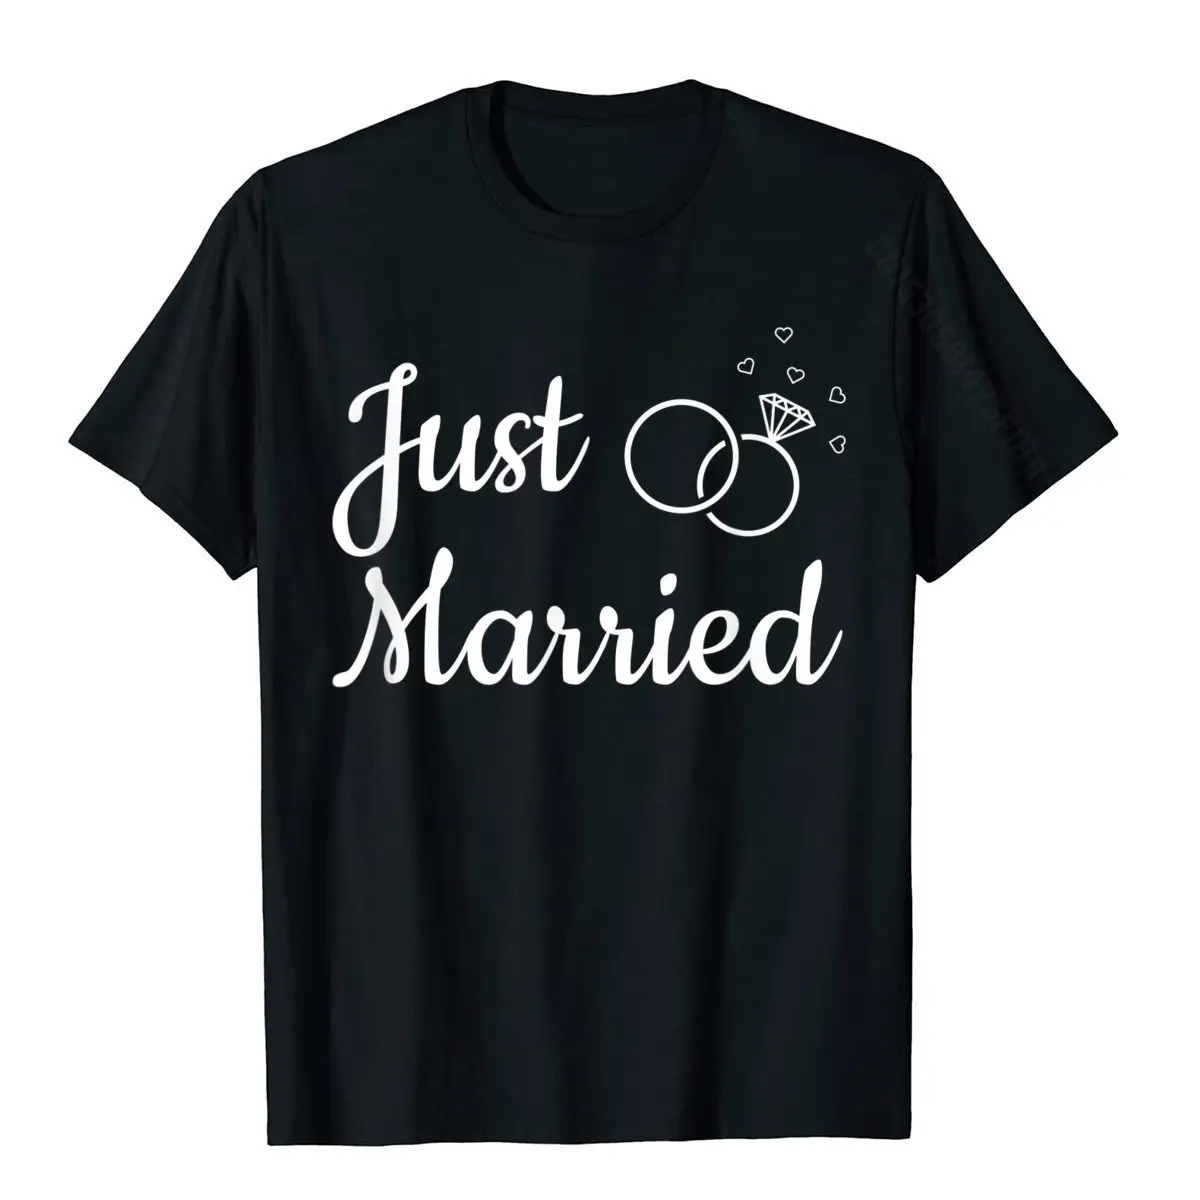 Just Married Newlywed Couple Matching Honeymoon T-Shirt Tops Tees Popular Slim Fit Cotton Mens Tshirts Slim Fit